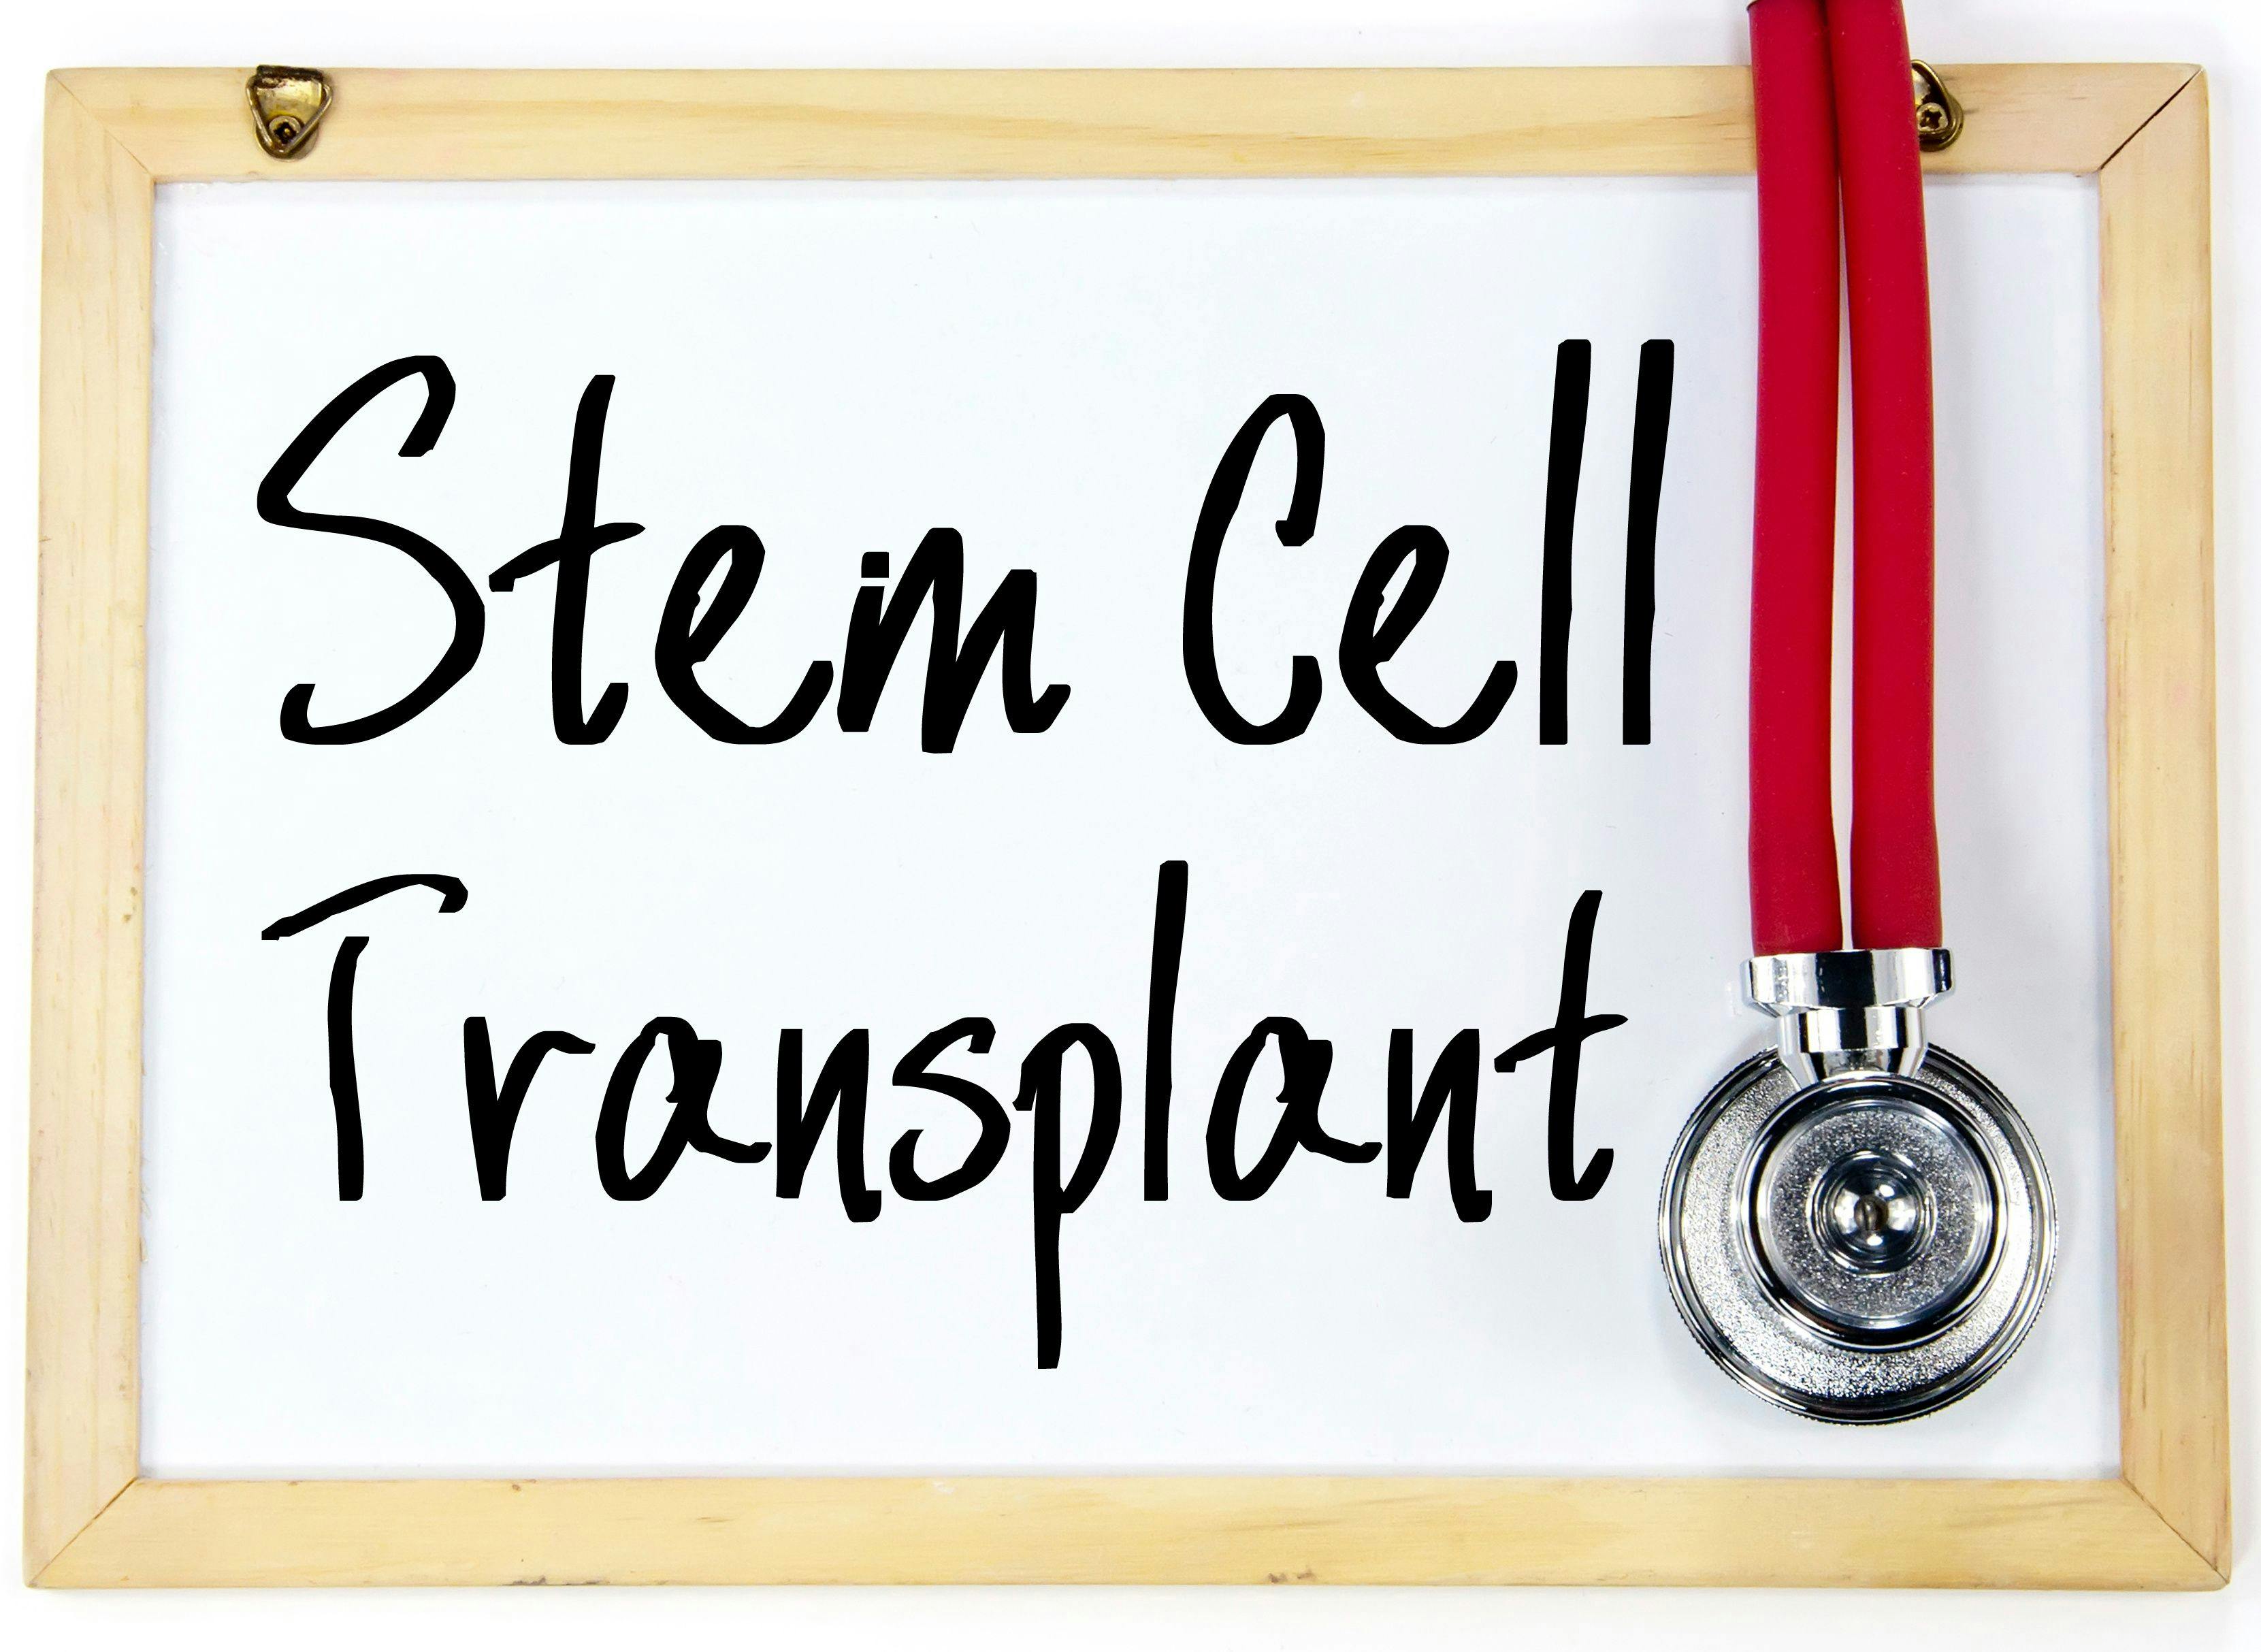 stem cell transplant text write on blackboard | Image credit: flytoskyft11 - stock.adobe.com